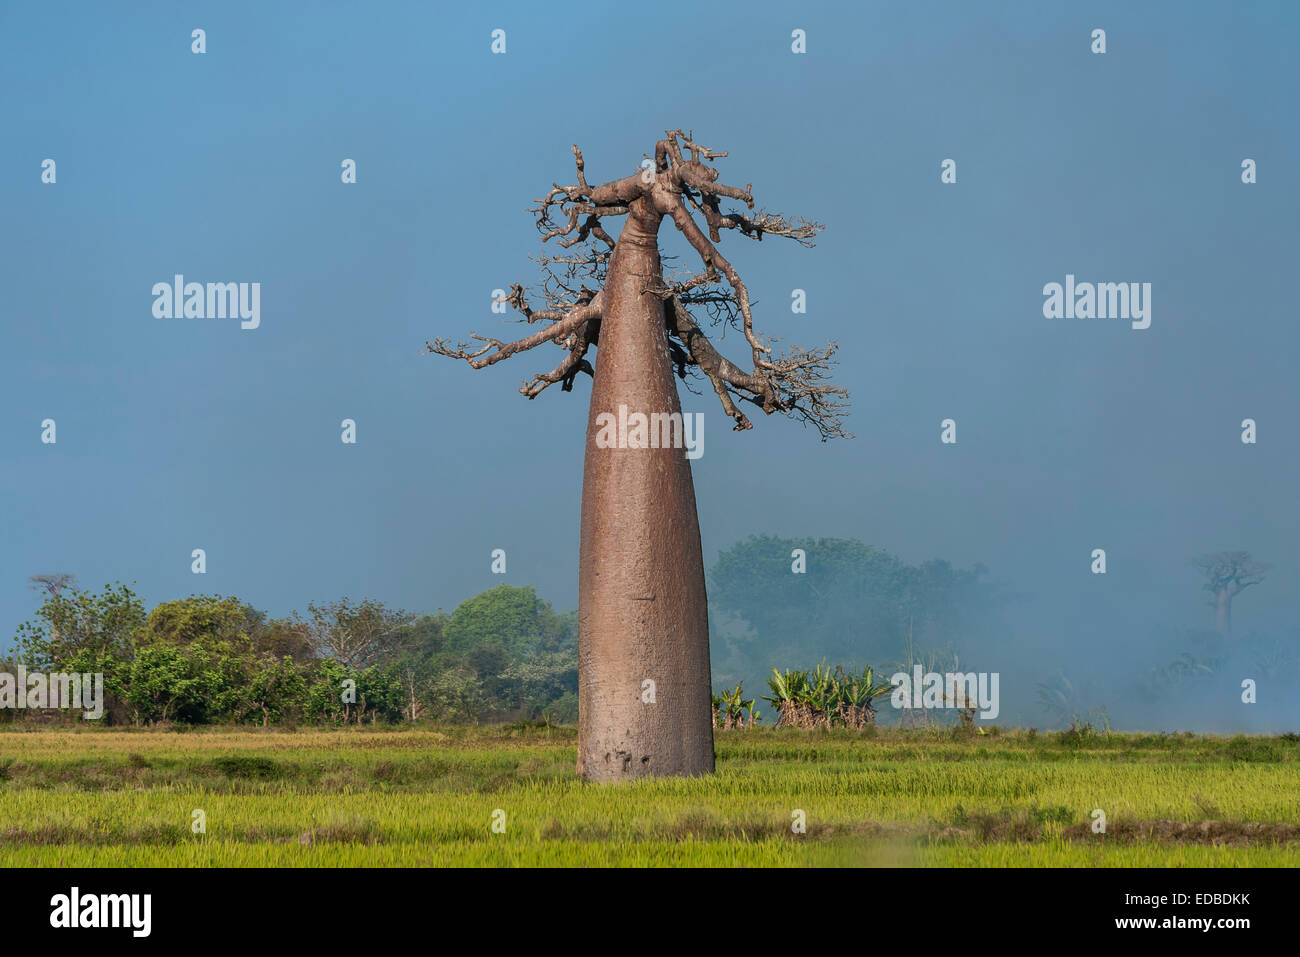 Avenida de los baobabs, deshojado baobab (Adansonia grandidieri), Morondava, Madagascar Foto de stock